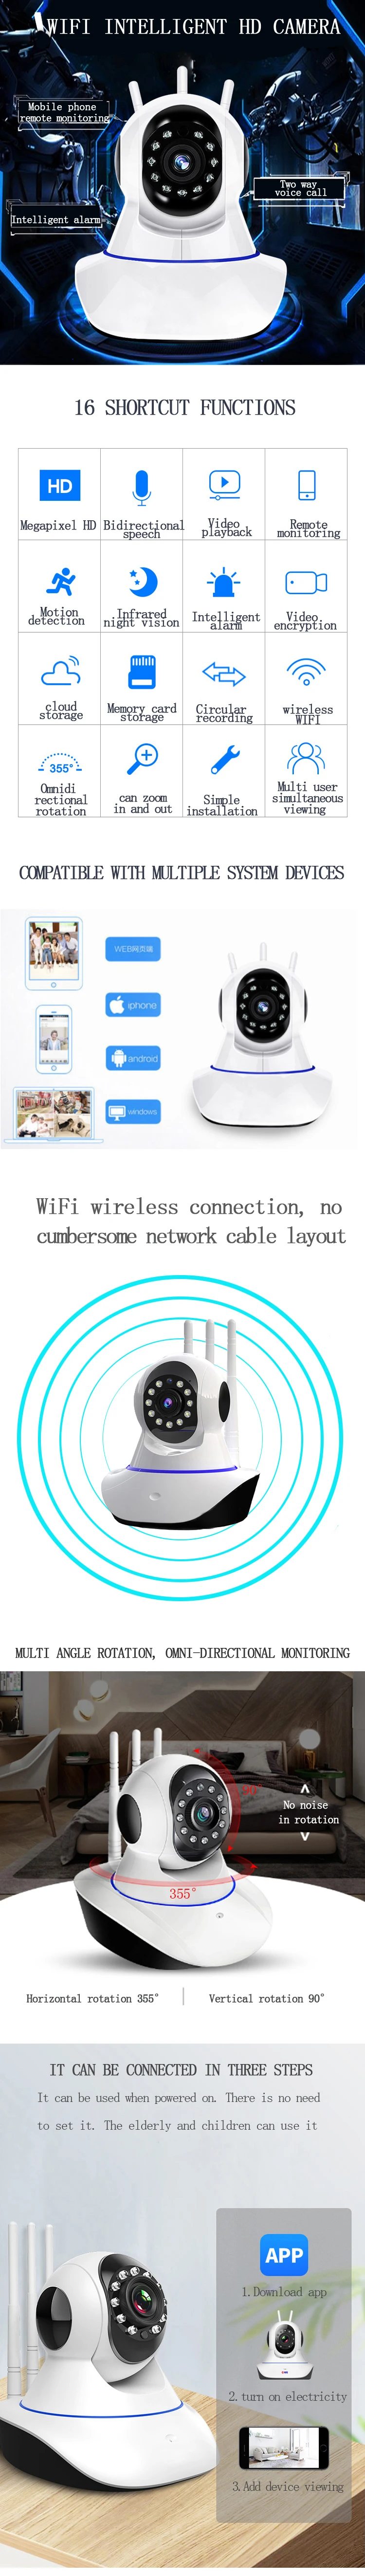 WiFi Security Surveillance IP Camera Navigation Panorama Elder/Pet/Office/Baby Monitor Smart Home  WiFi Wireless camera